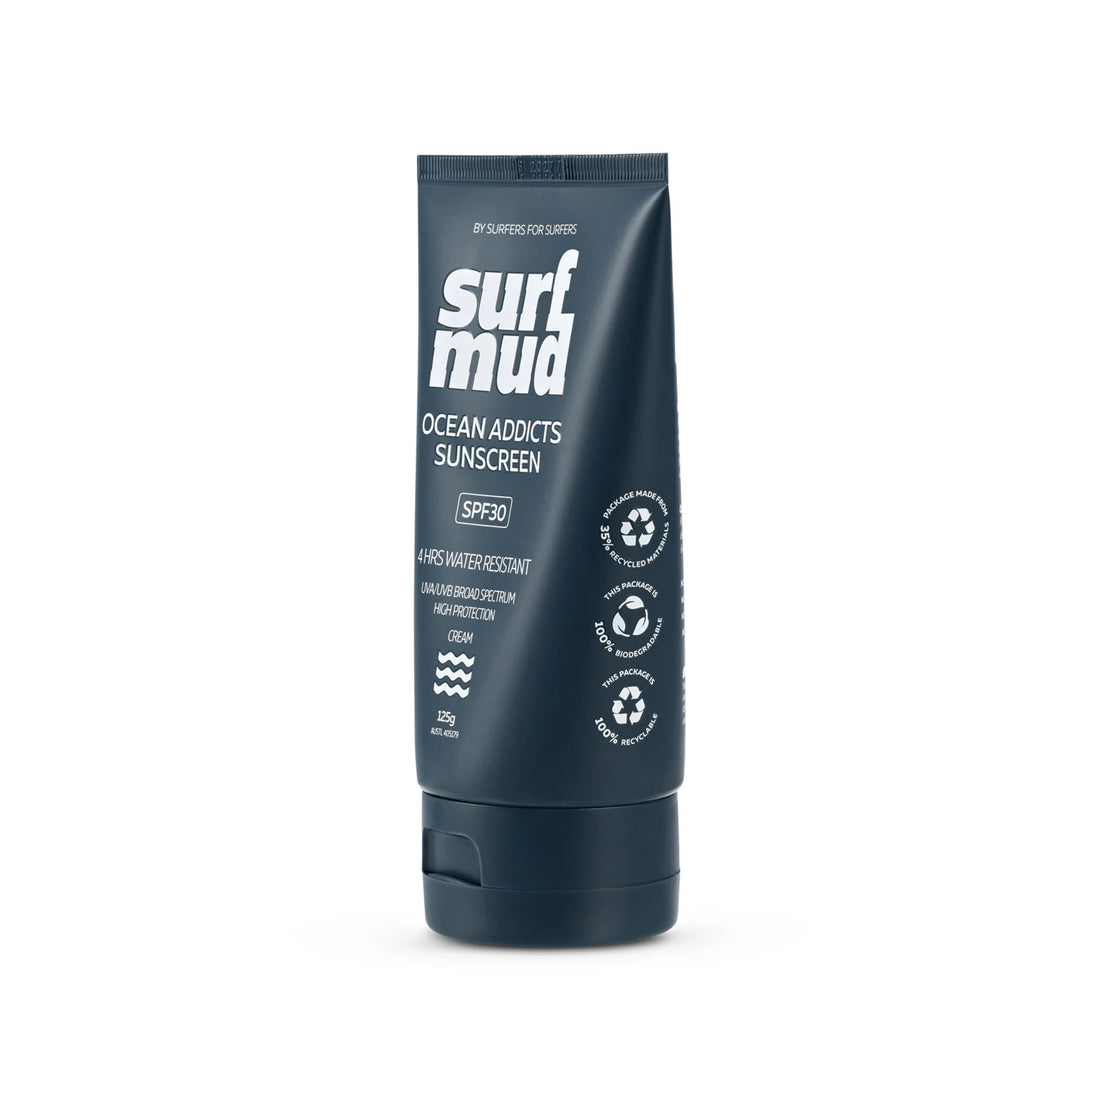 Surfmud - Ocean Addicts SPF30 Sunscreen - 125g - Seaside Surf Shop 